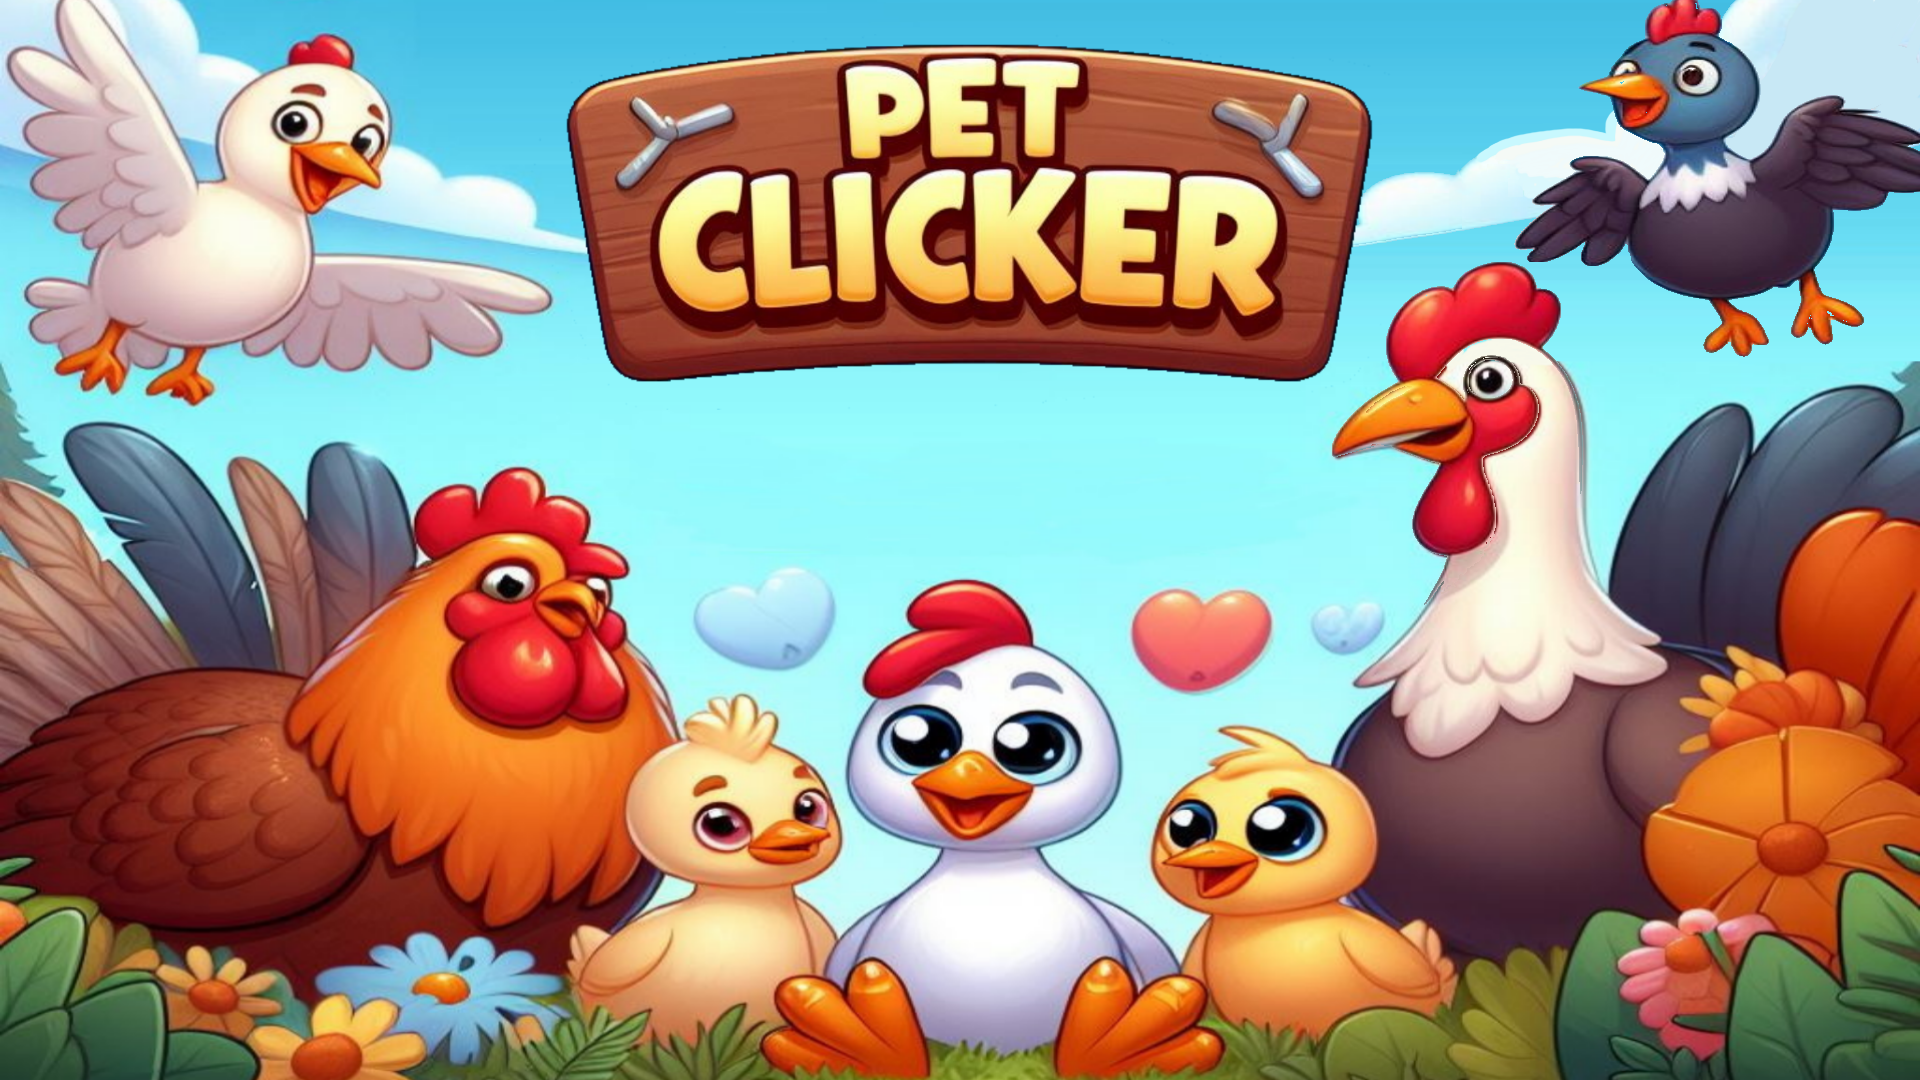 Pet Clicker Game Image